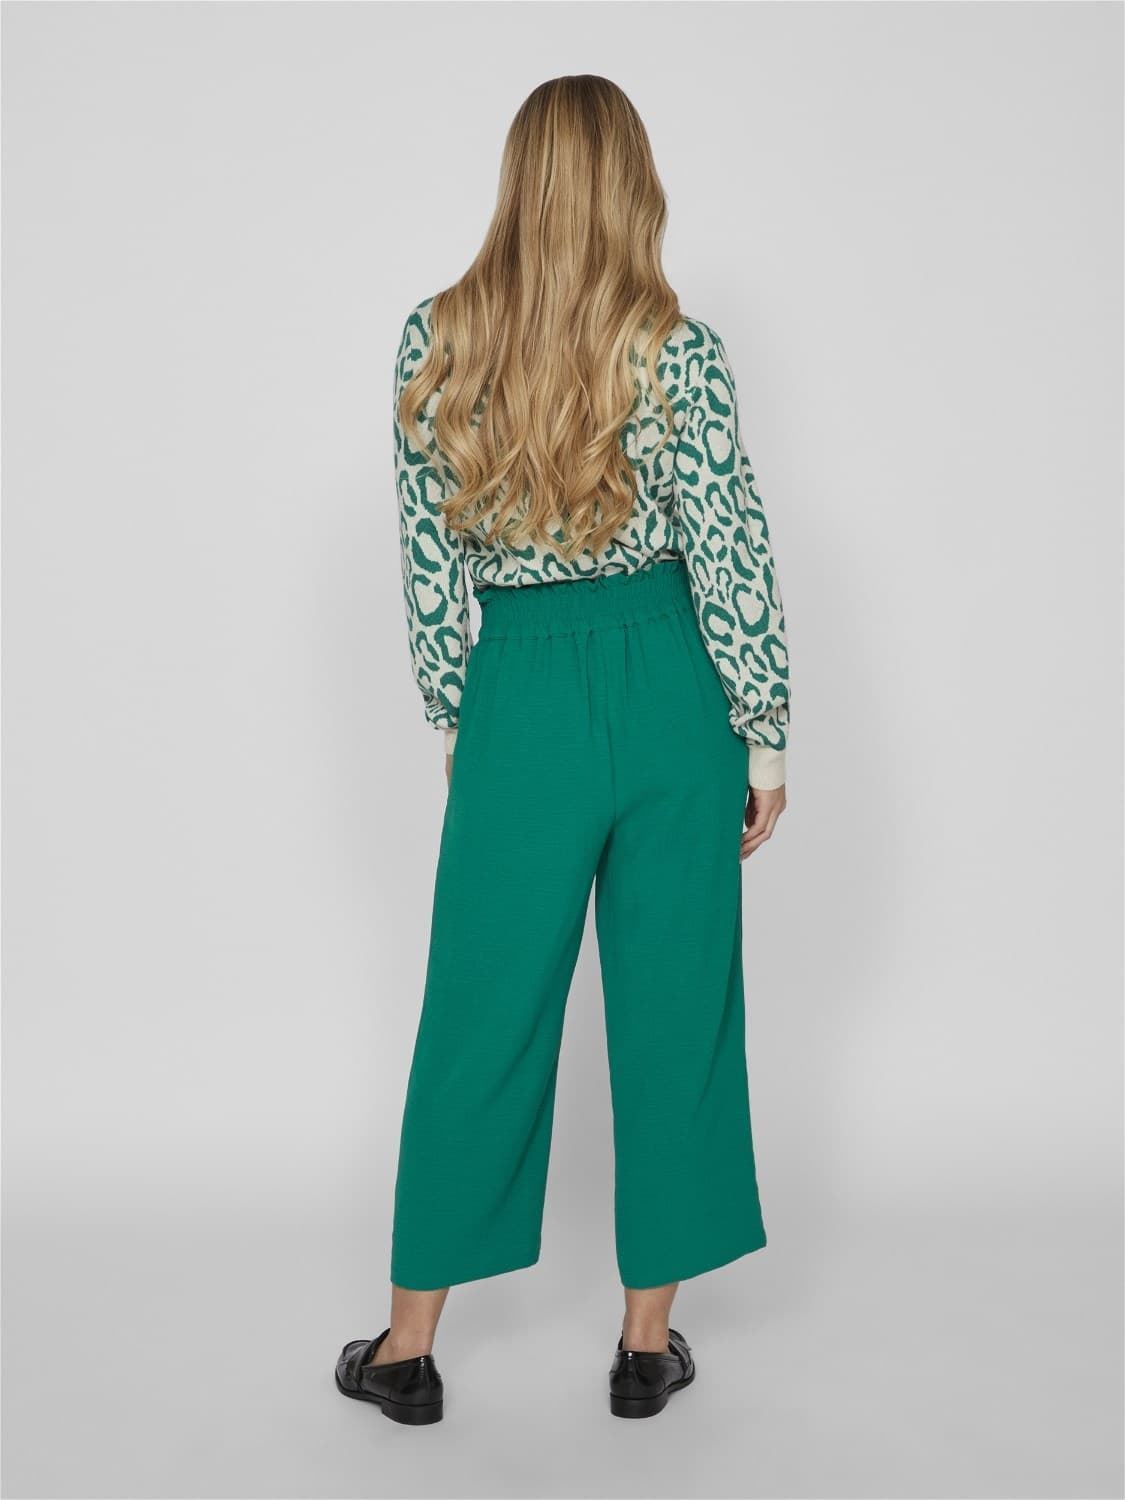 Pantalón verde viwinnie - Imagen 2